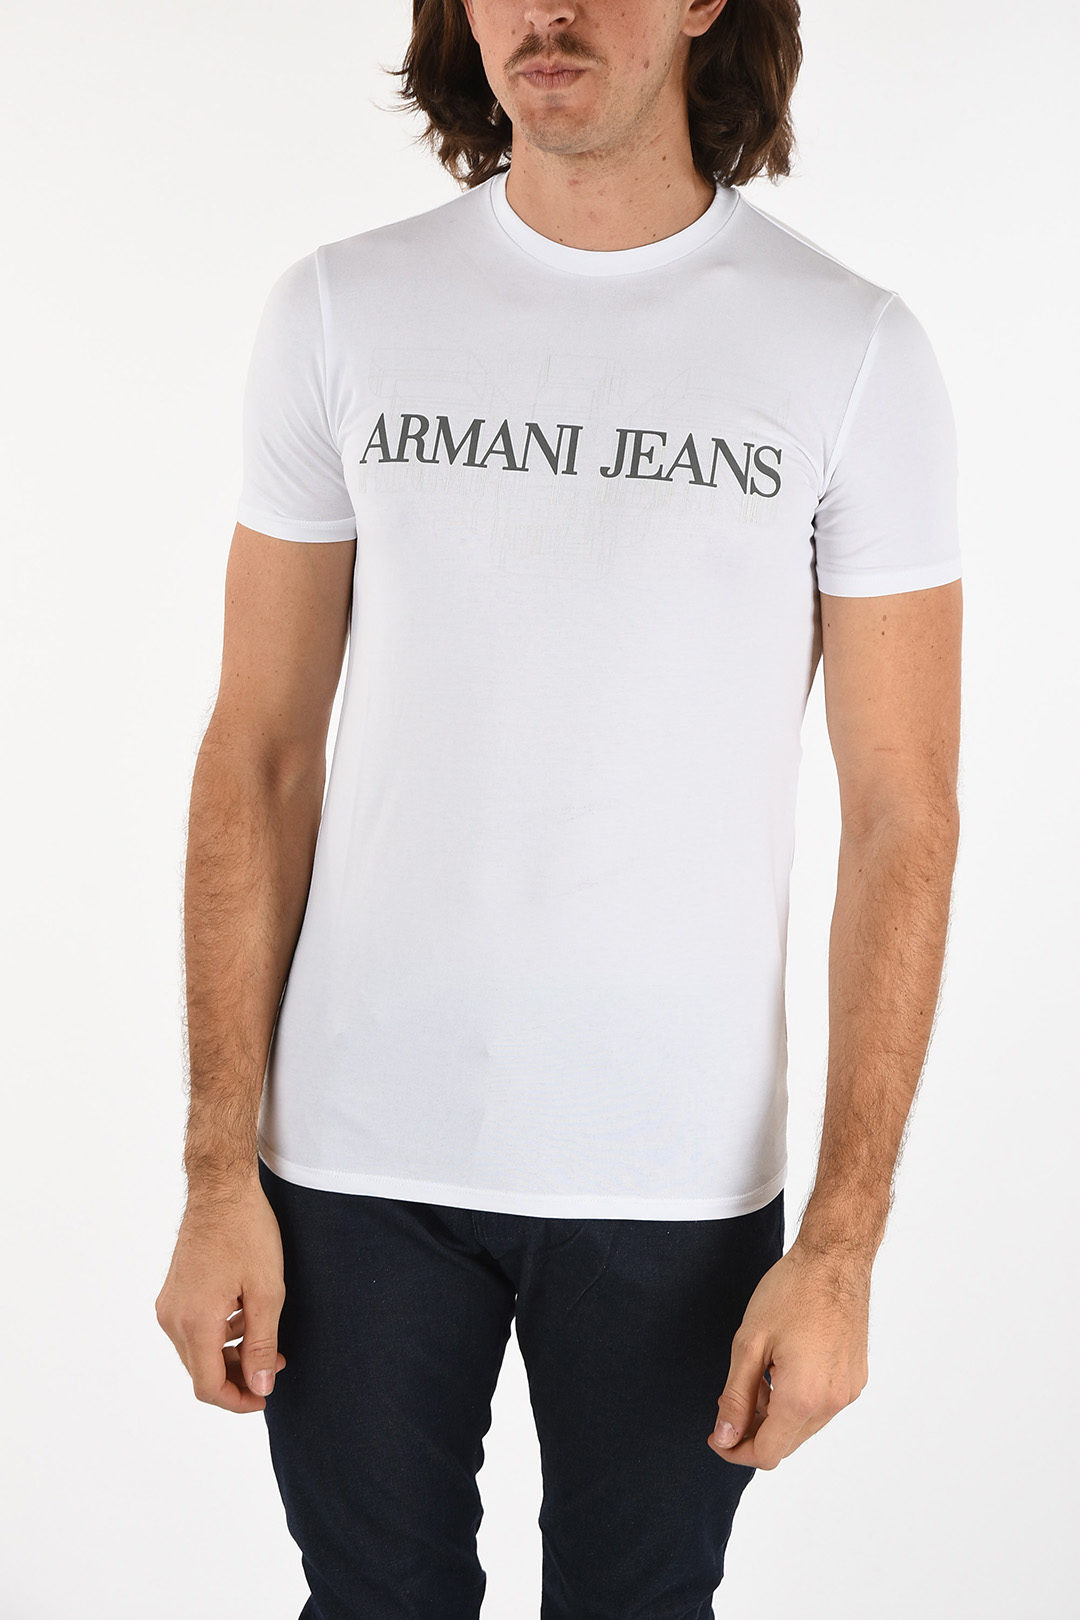 Tee-shirts Armani Jeans Homme Tee-shirt ARMANI JEANS 1 bleu S Homme Vêtements Armani Jeans Homme Tee-shirts & Polos Armani Jeans Homme Tee-shirts Armani Jeans Homme 